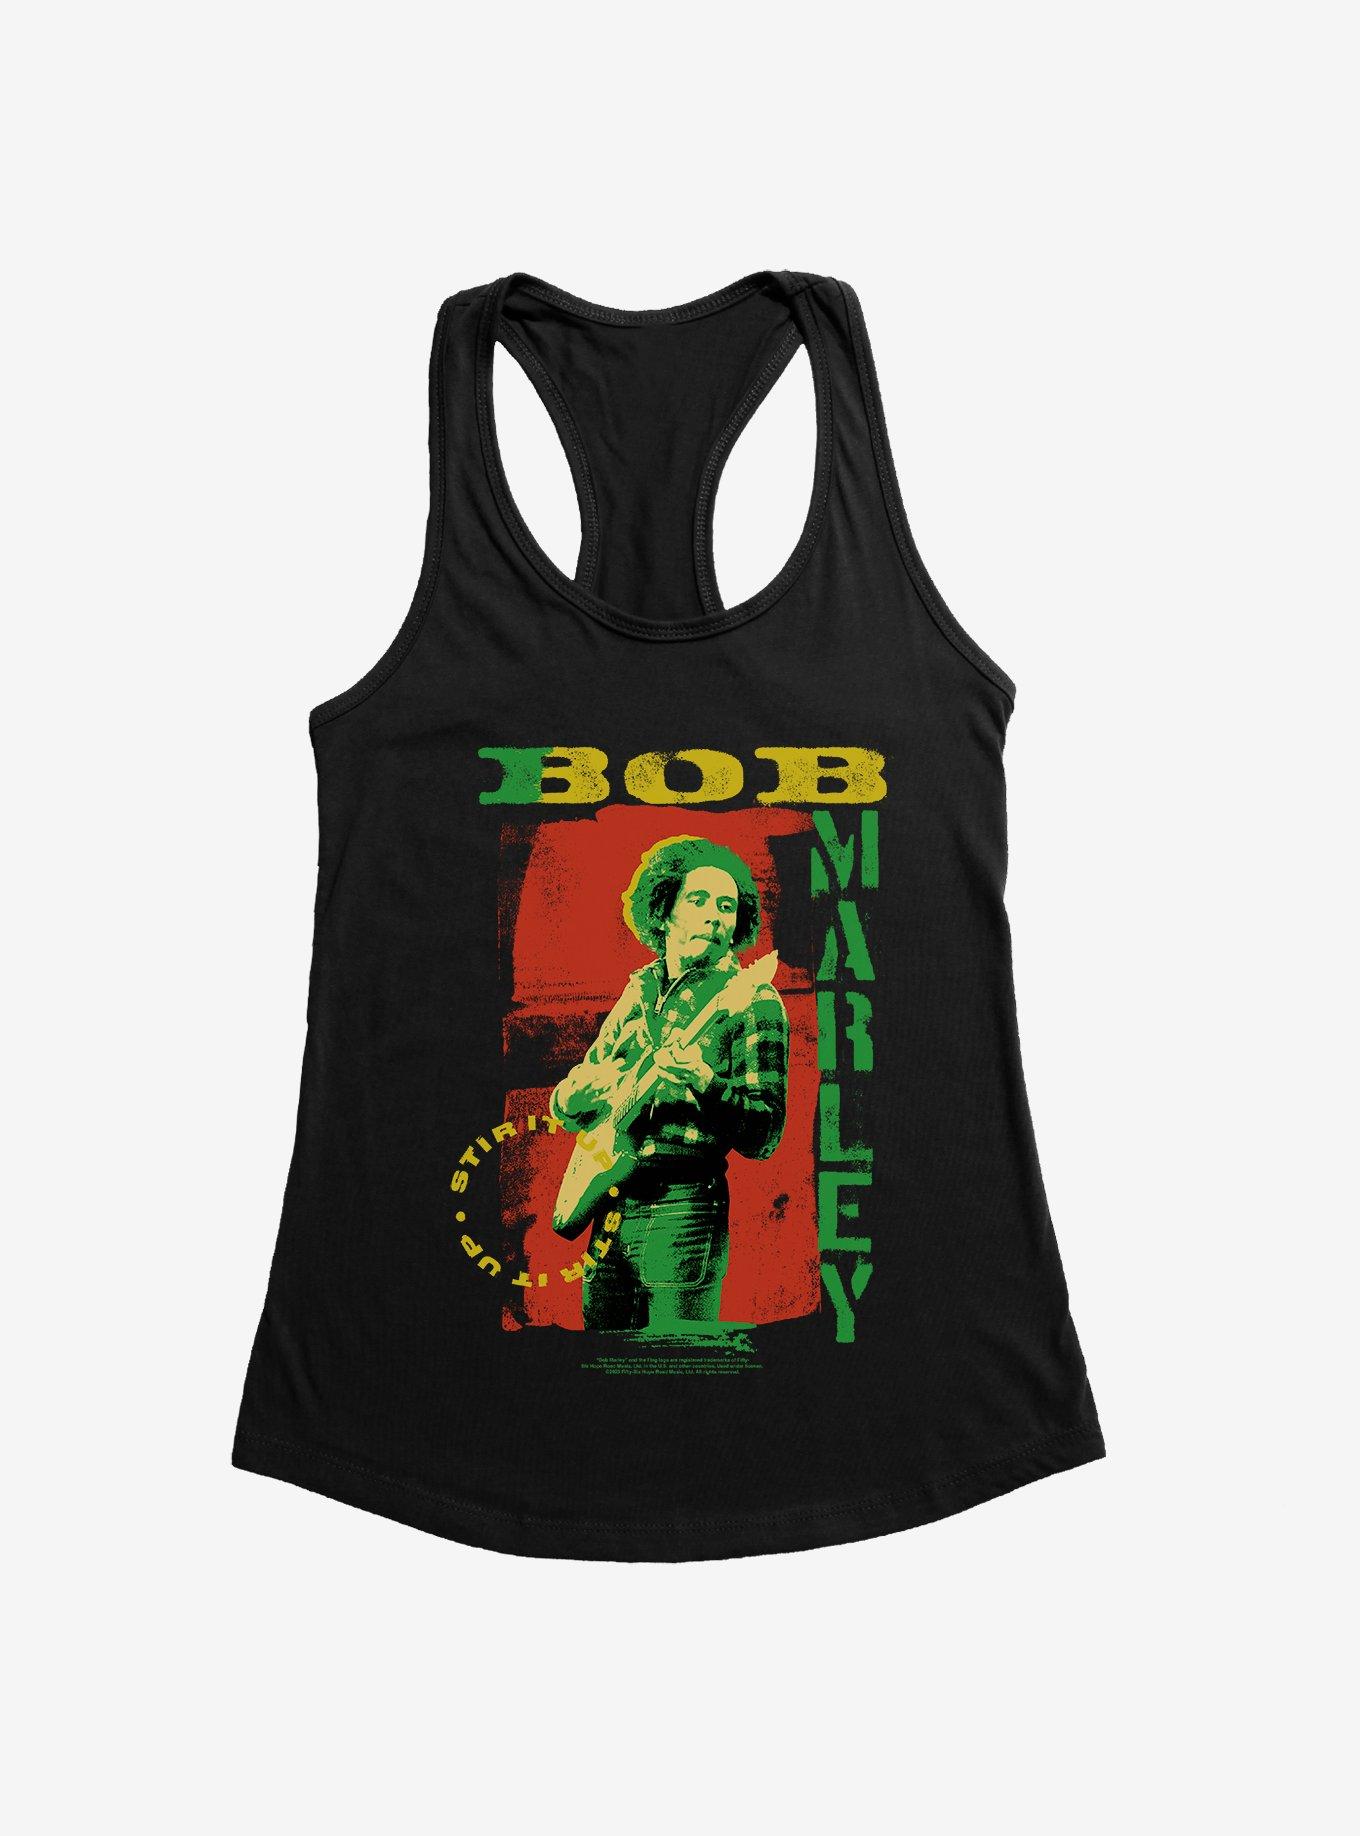 Bob Marley Stir It Up Girls Tank